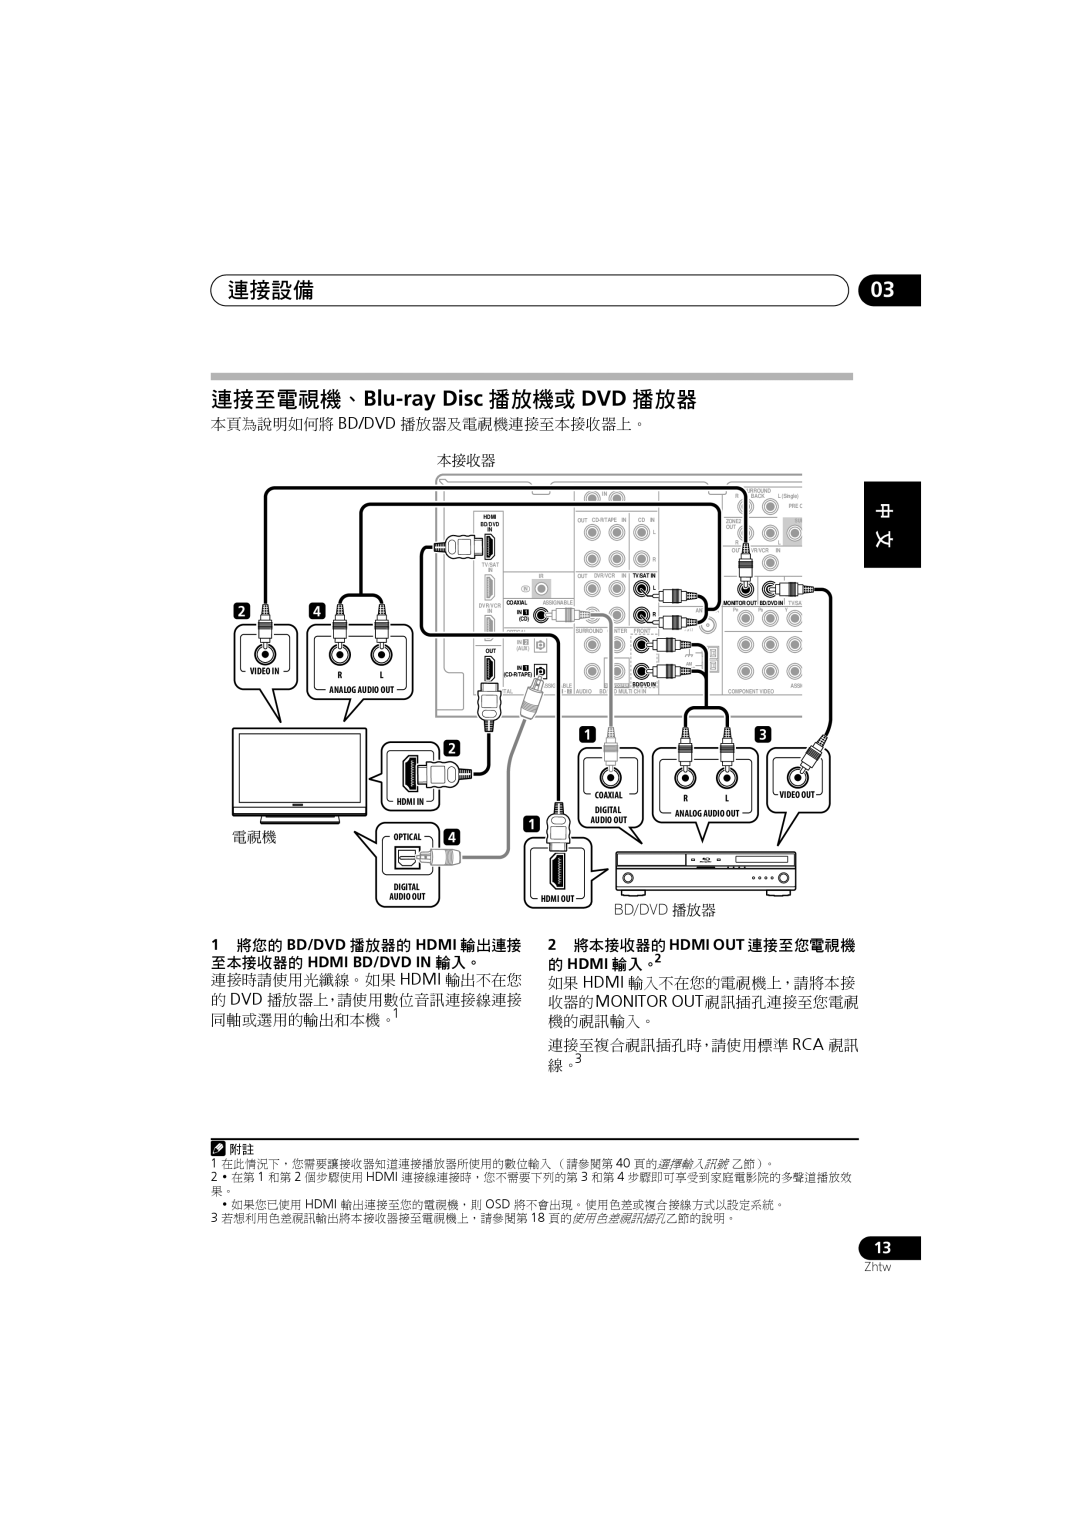 Pioneer VSX-819H-S manual 連接設備, 連接至電視機、Blu-rayDisc 播放機或 DVD 播放器, 本頁為說明如何將 Bd/Dvd 播放器及電視機連接至本接收器上。, English, Deutsch 